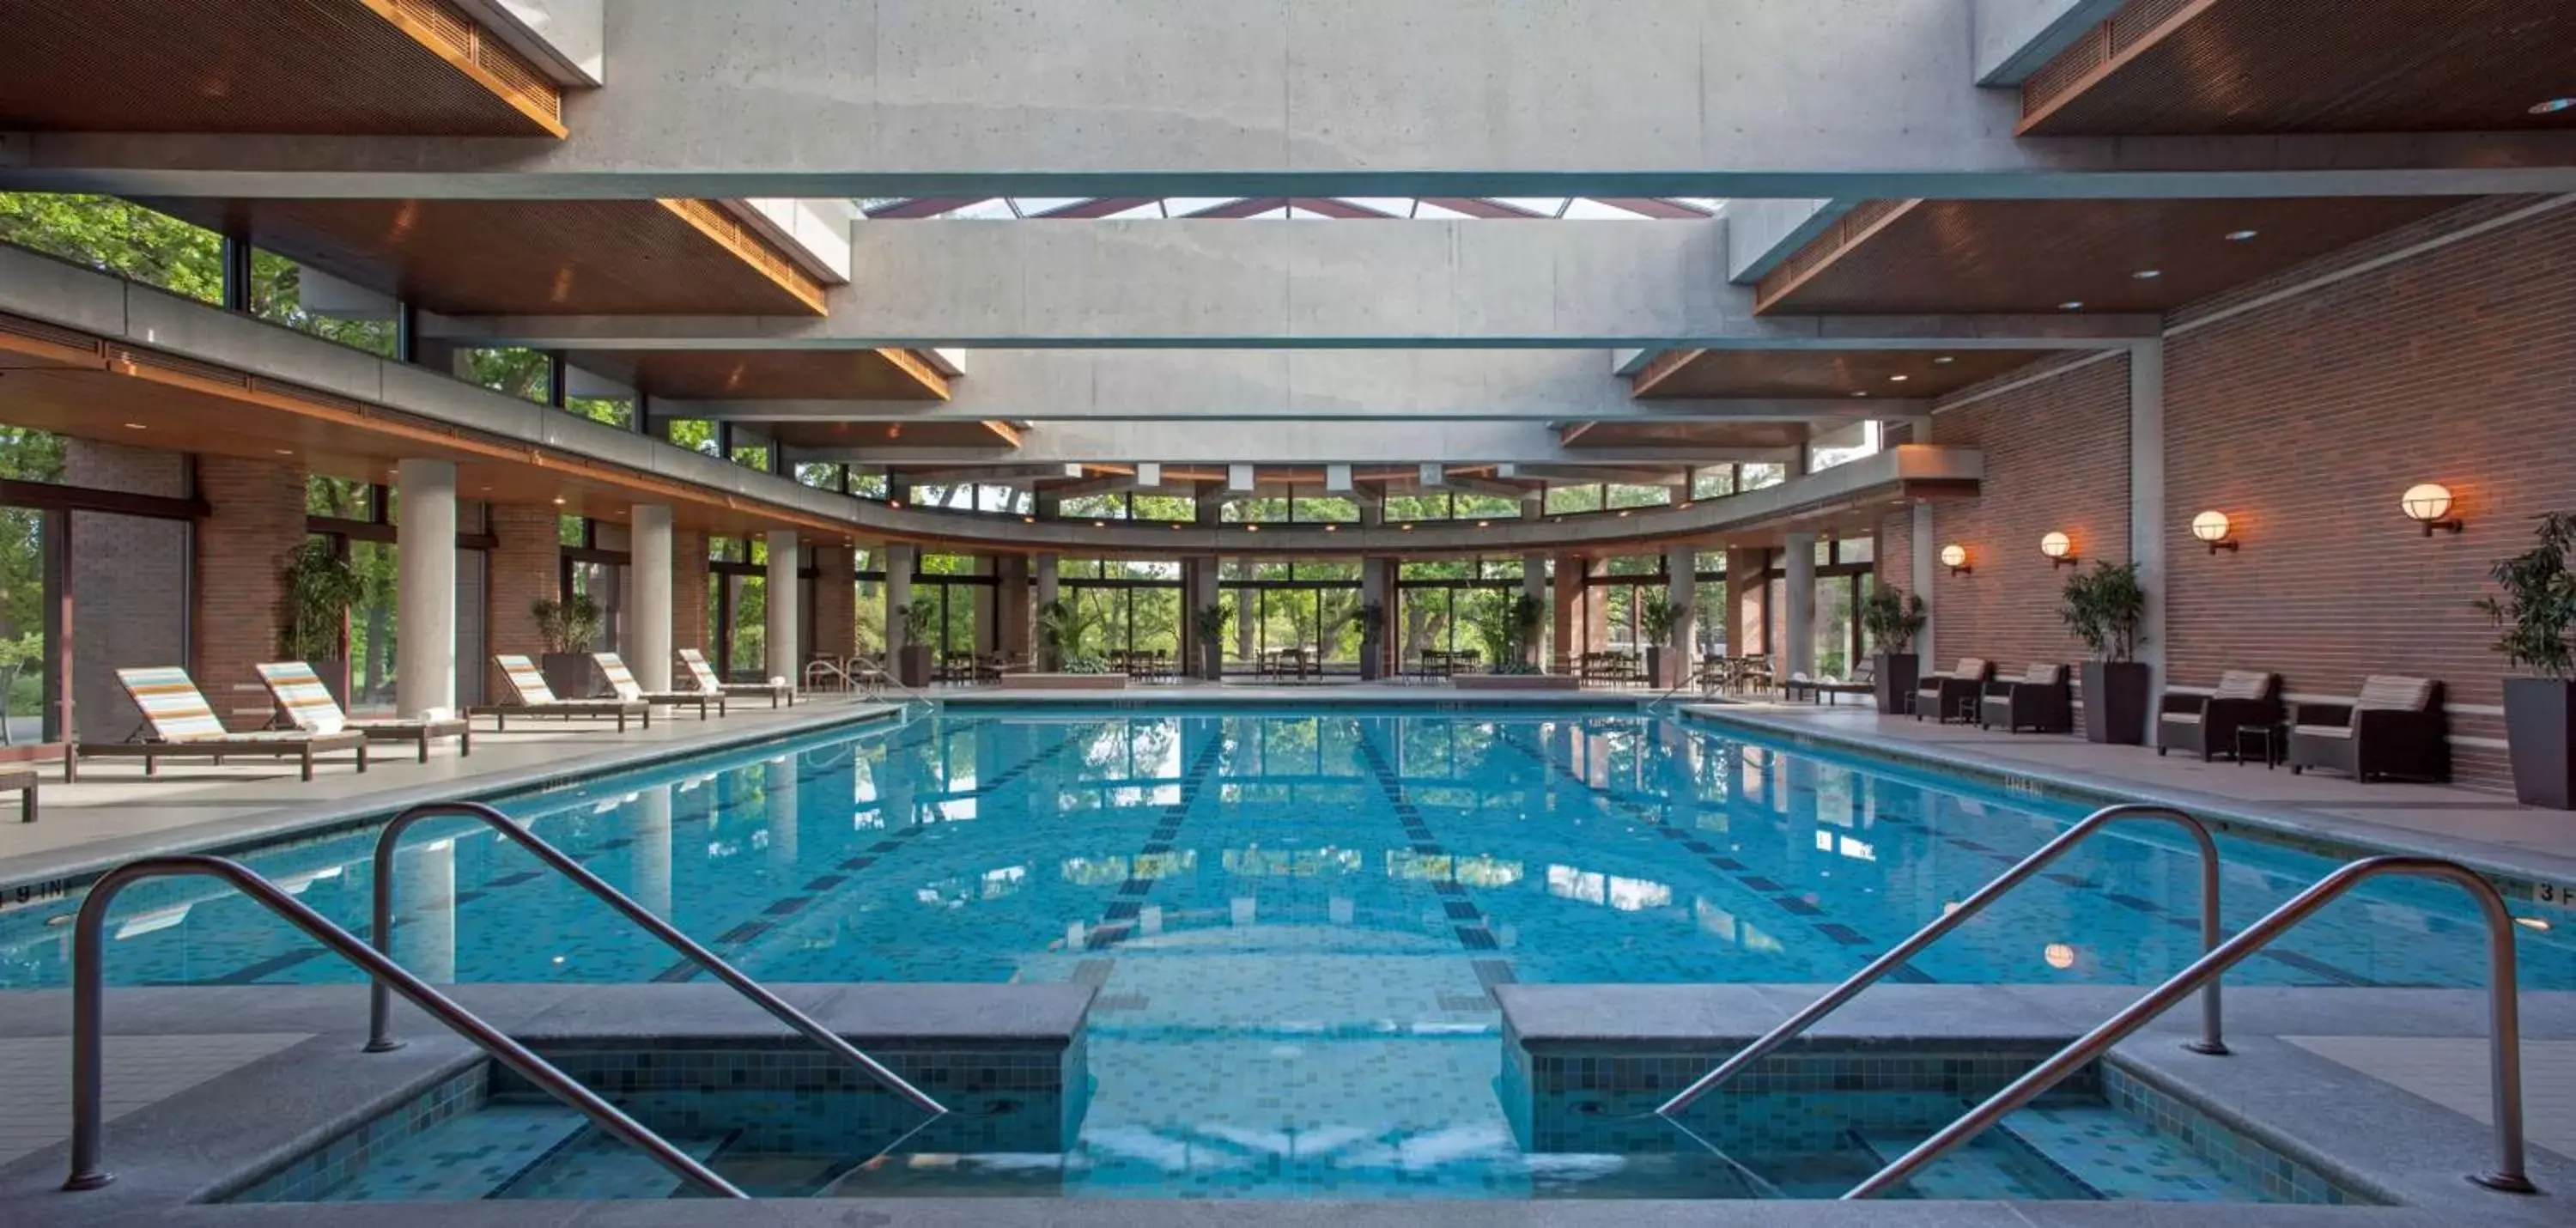 On site, Swimming Pool in Hyatt Lodge Oak Brook Chicago